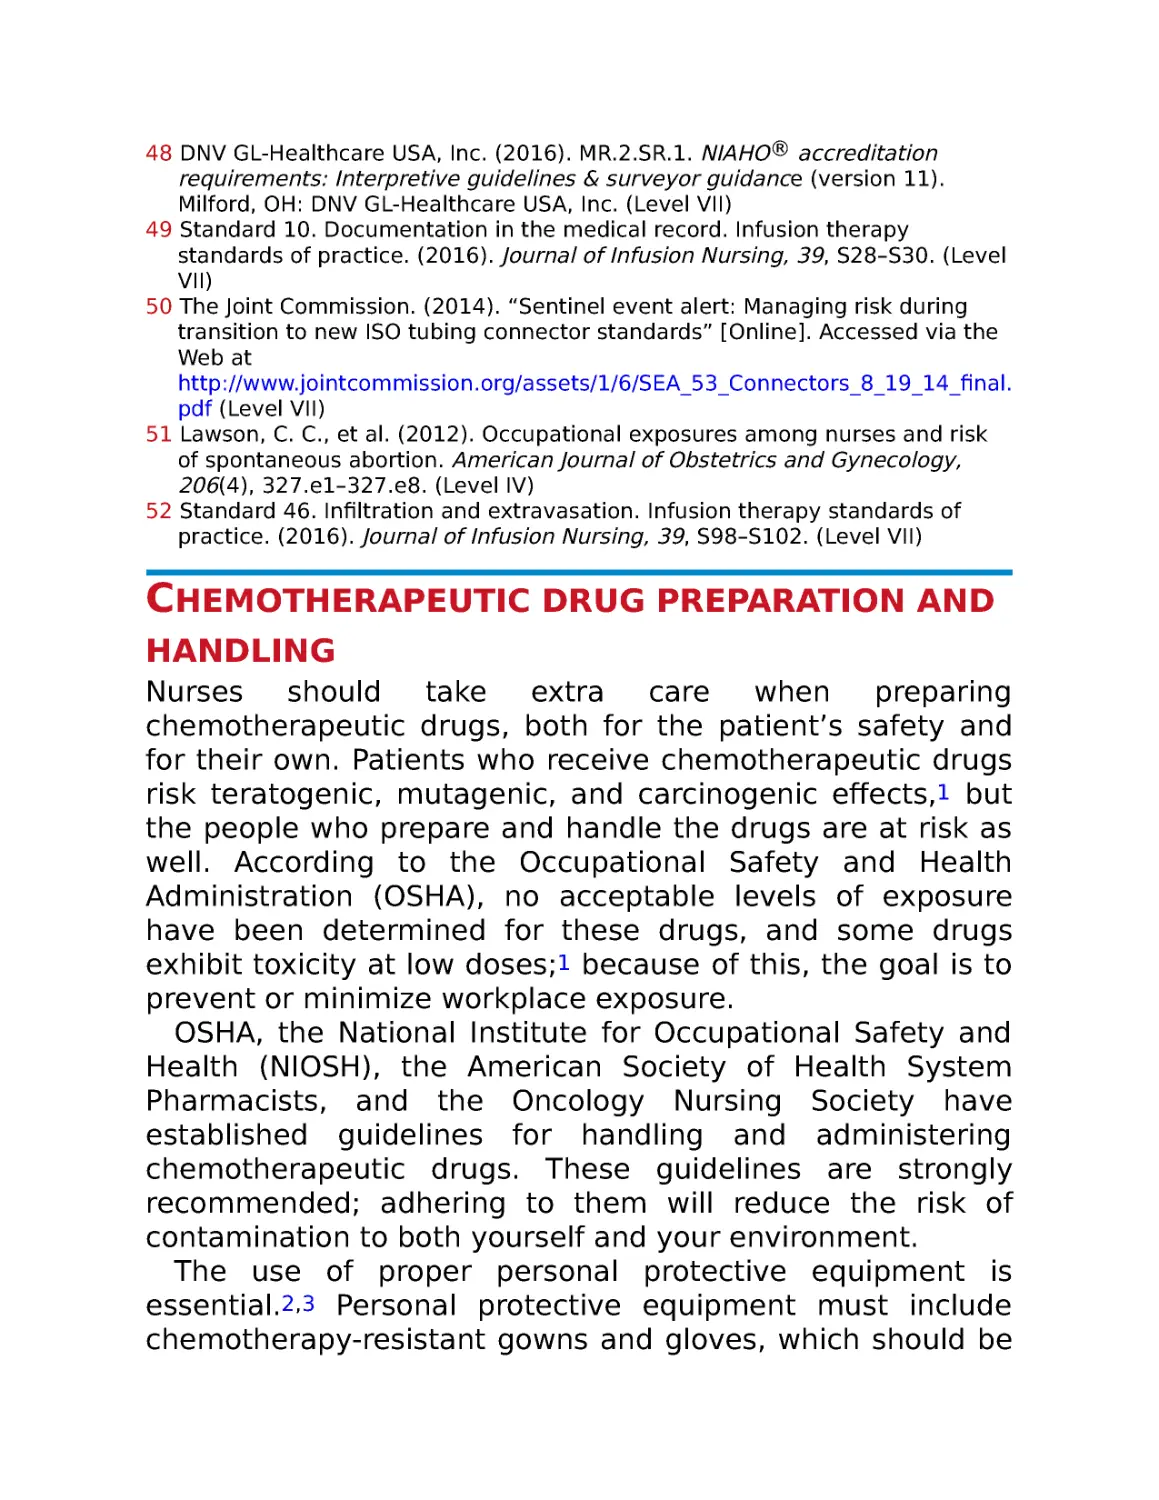 Chemotherapeutic drug preparation and handling